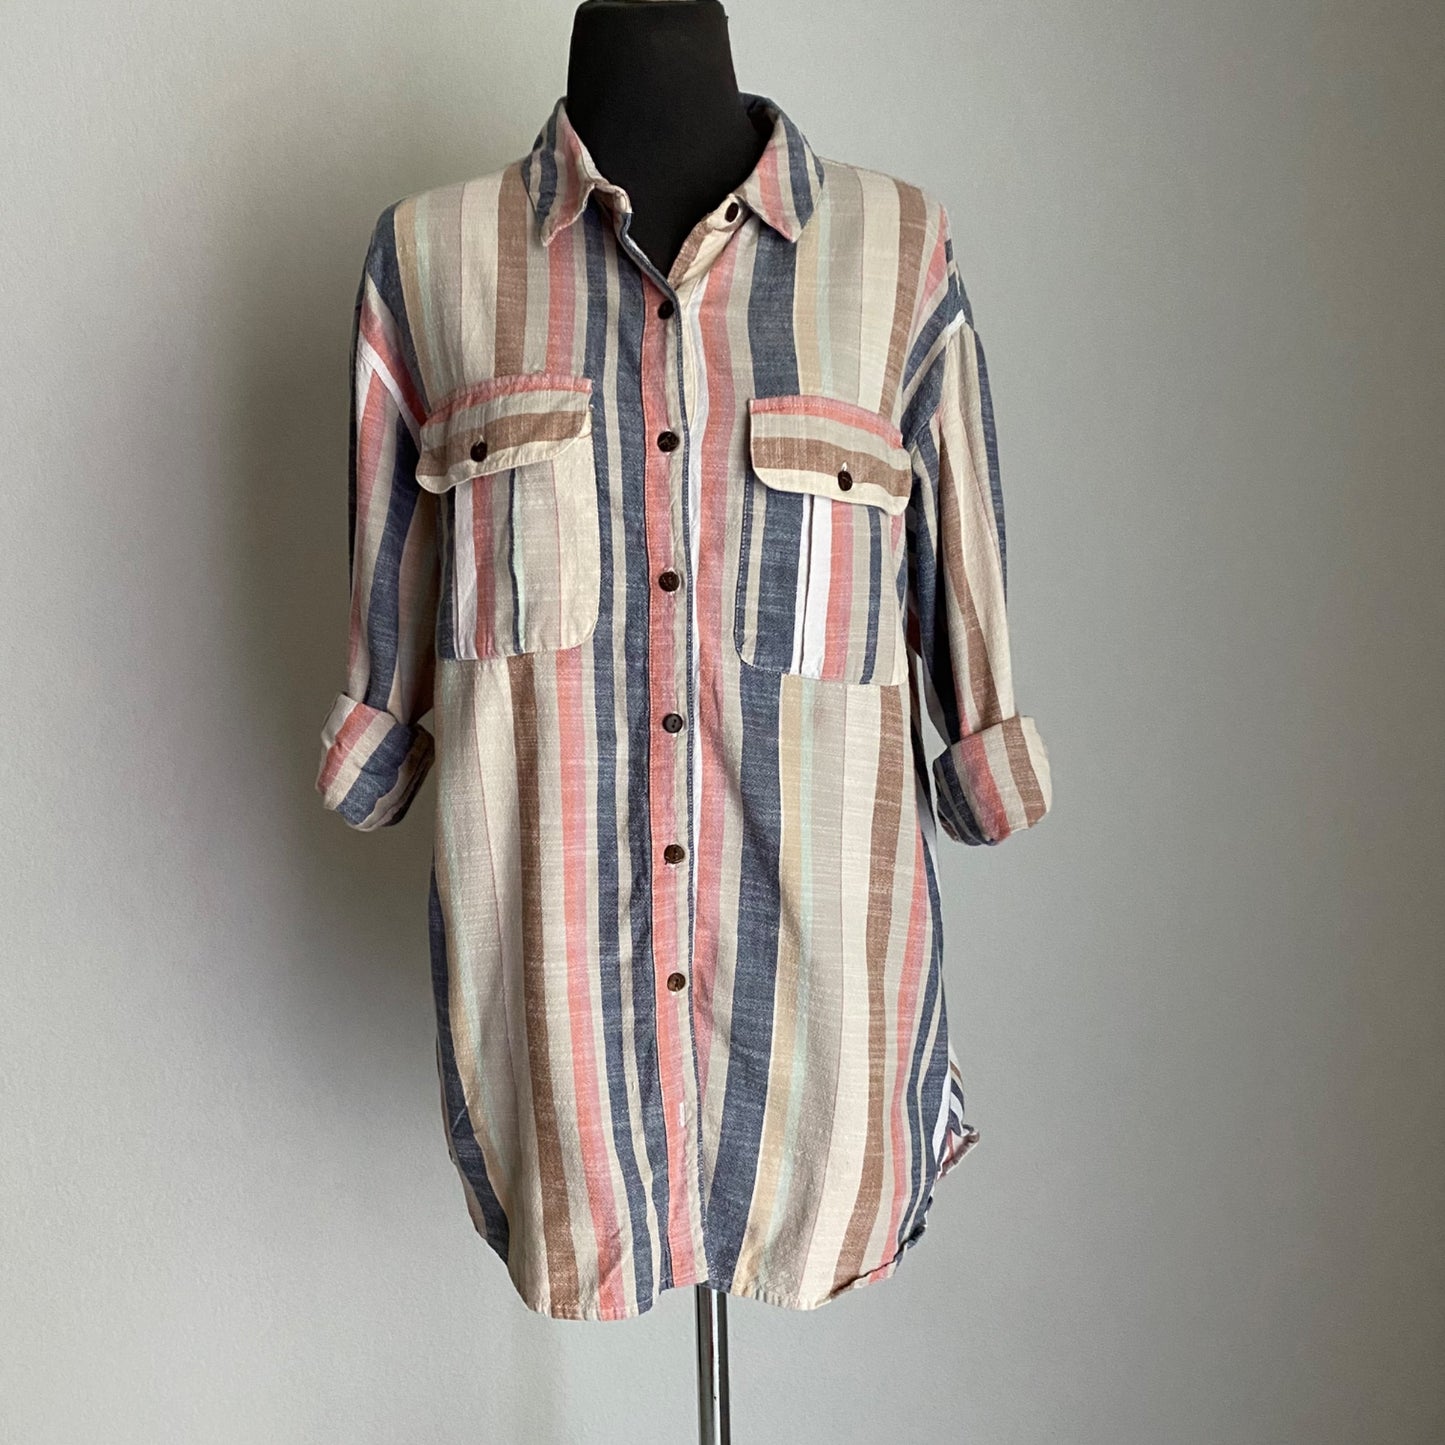 Urban Outfitter sz M 100% cotton Long sleeve 80s inspired button pockets stripe shirt